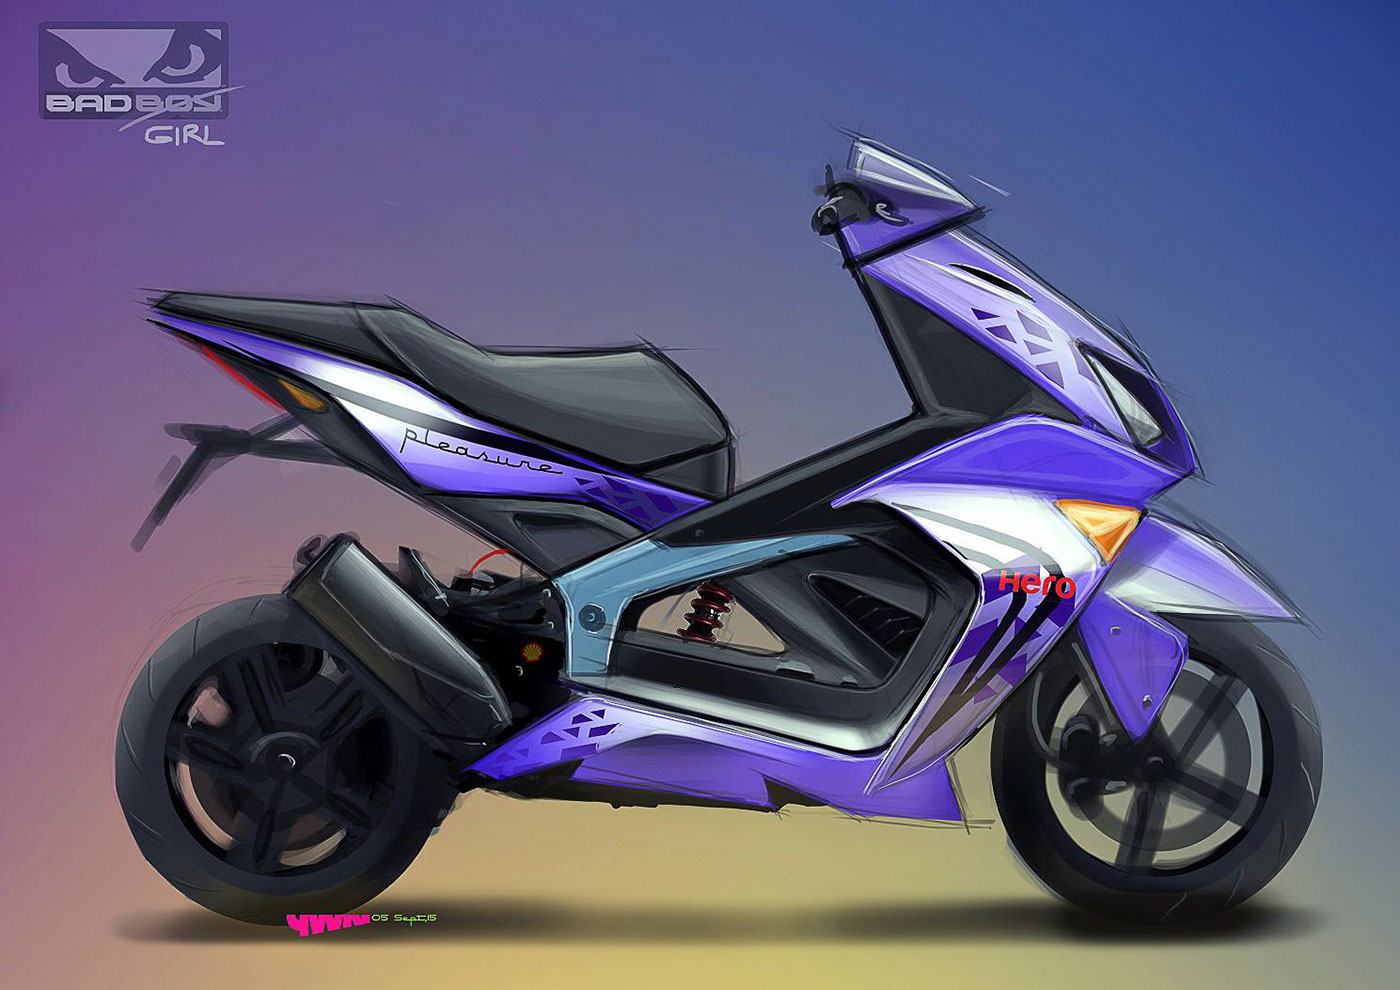 motorcycle yamaha Honda hero moto triumph car motorcycle design sketches